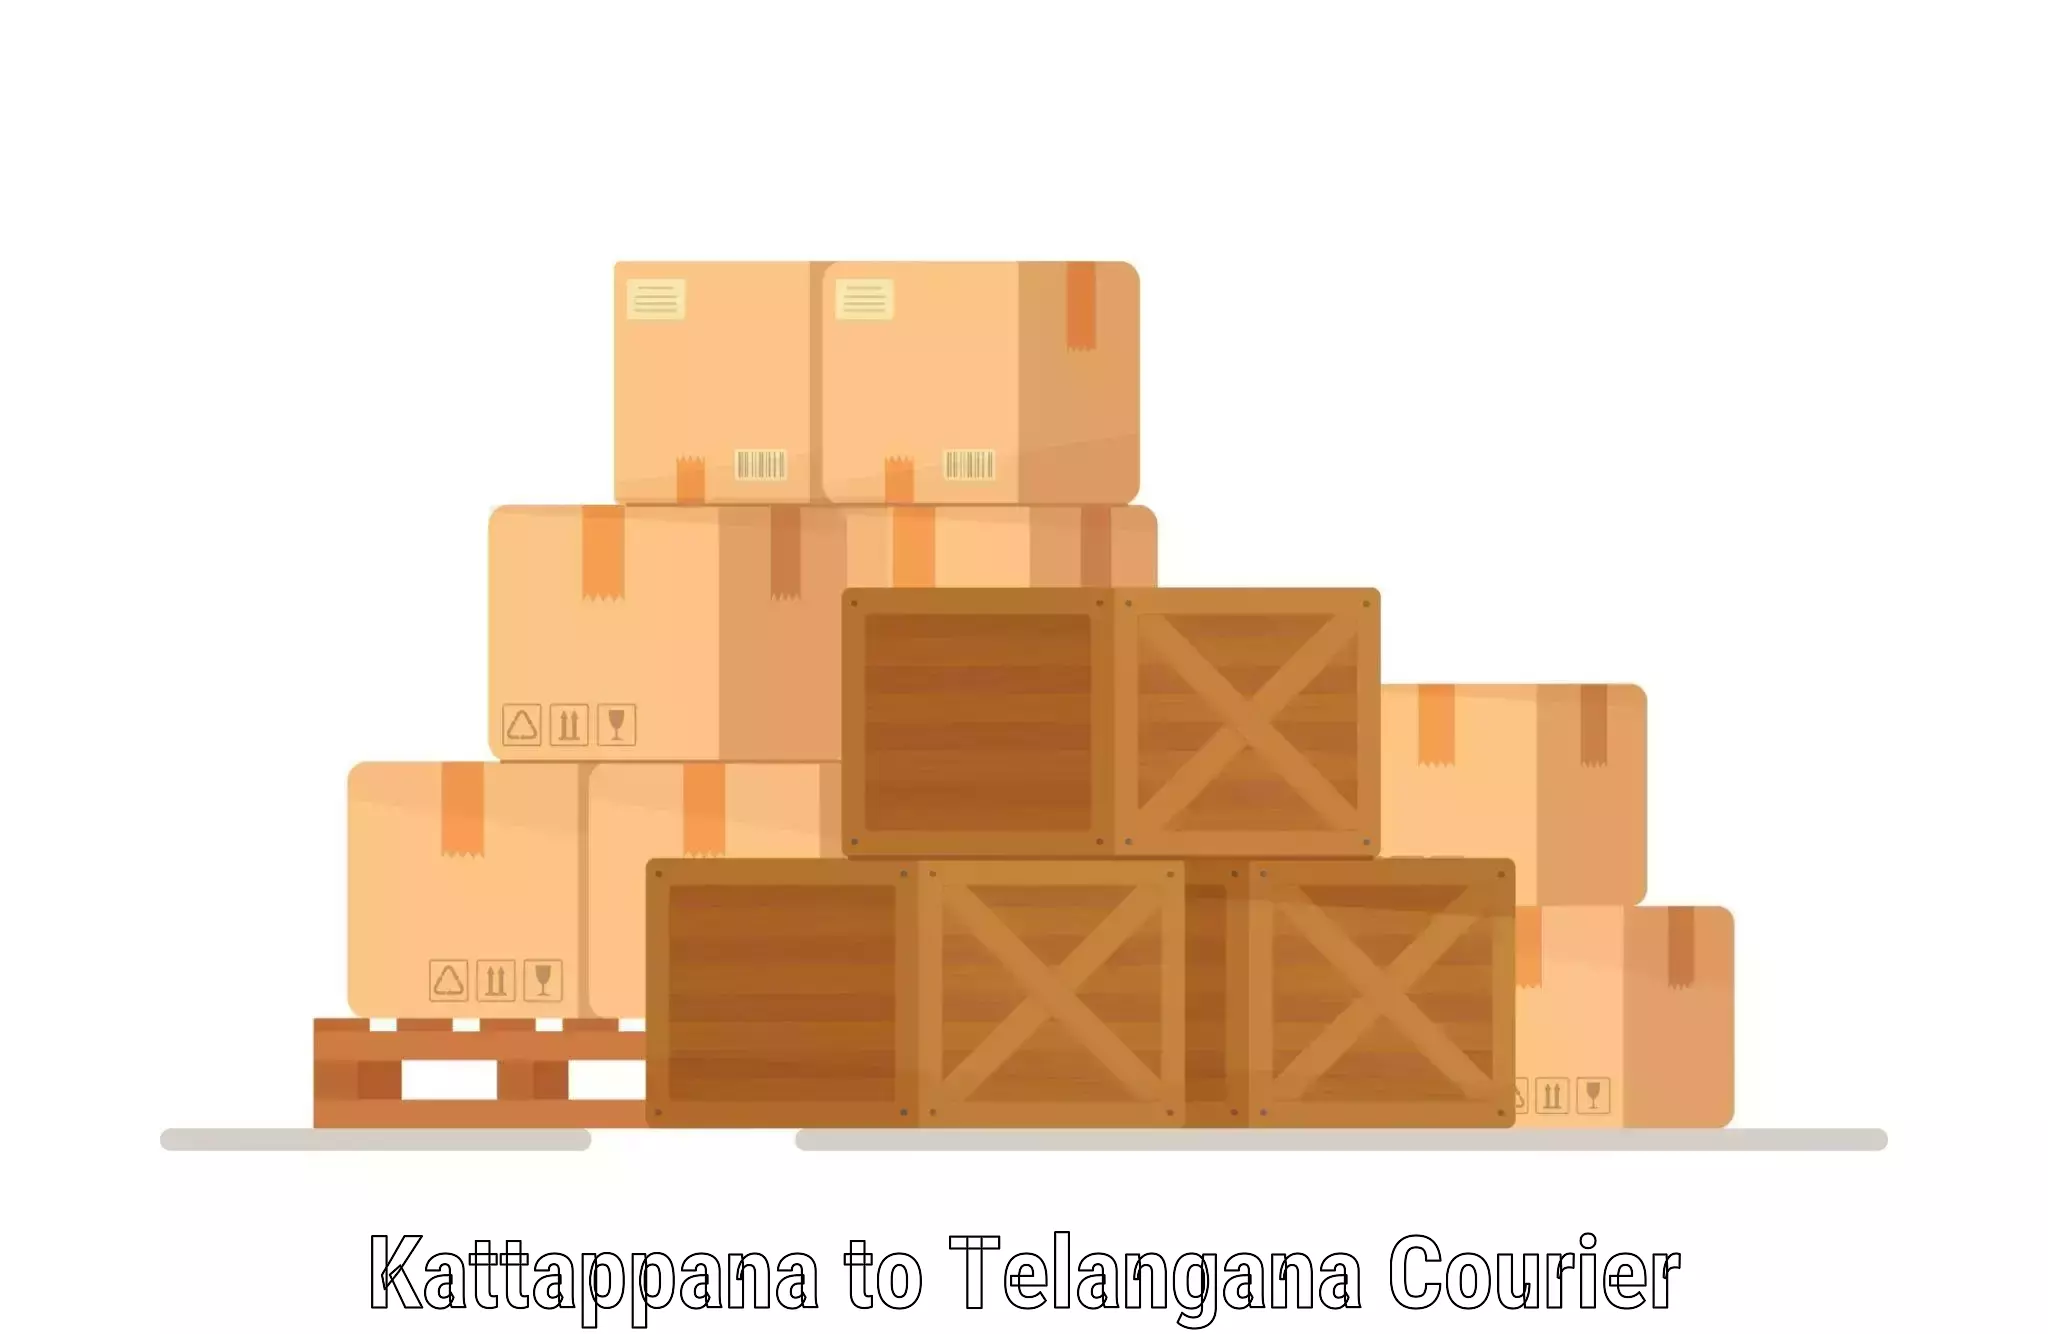 Track and trace shipping Kattappana to Manneguda